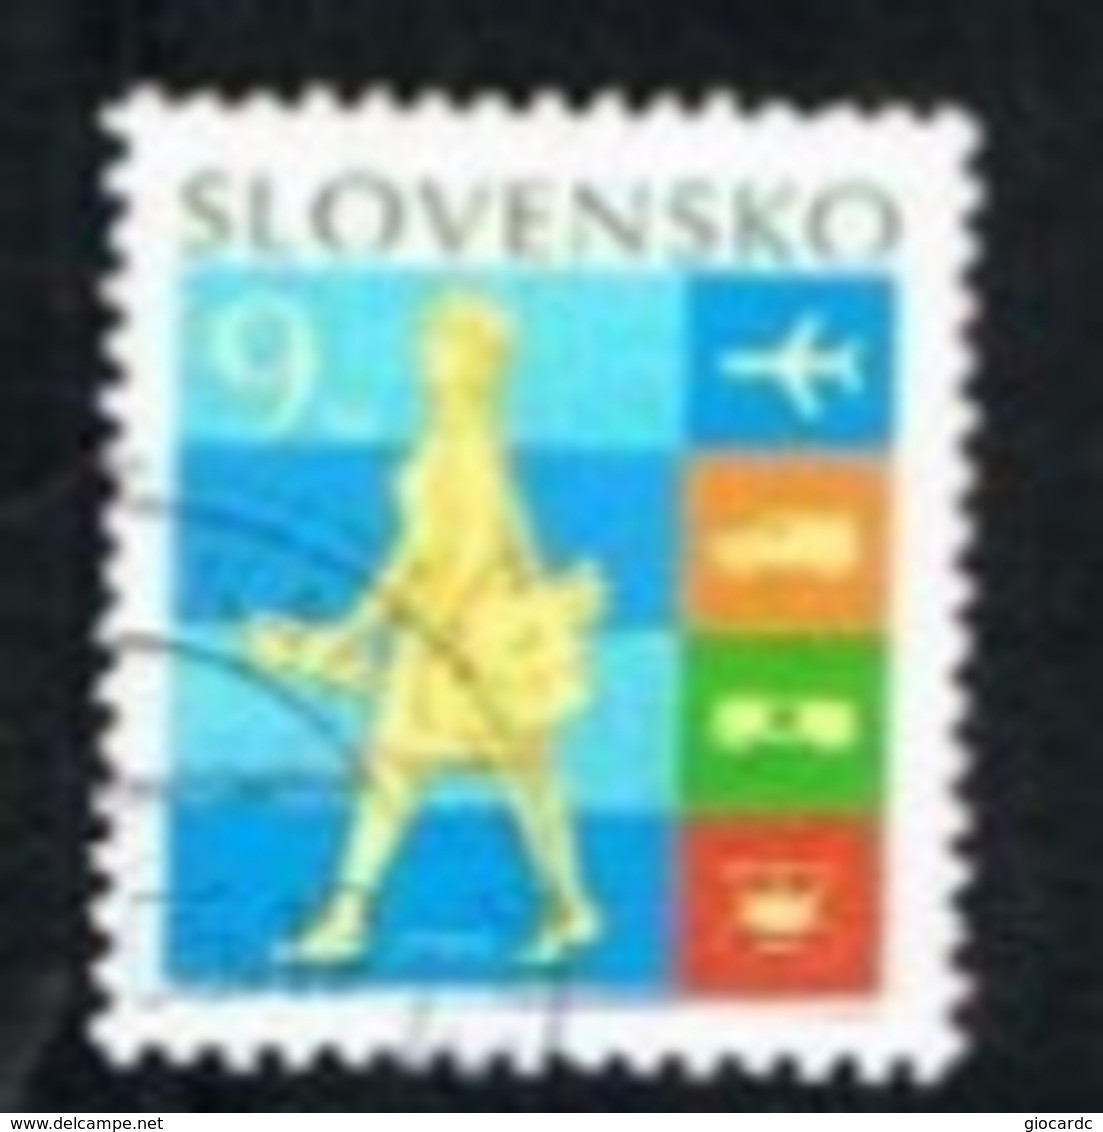 SLOVACCHIA (SLOVAKIA)  -  SG 458  -  2004  STAMP DAY -   USED - Usati